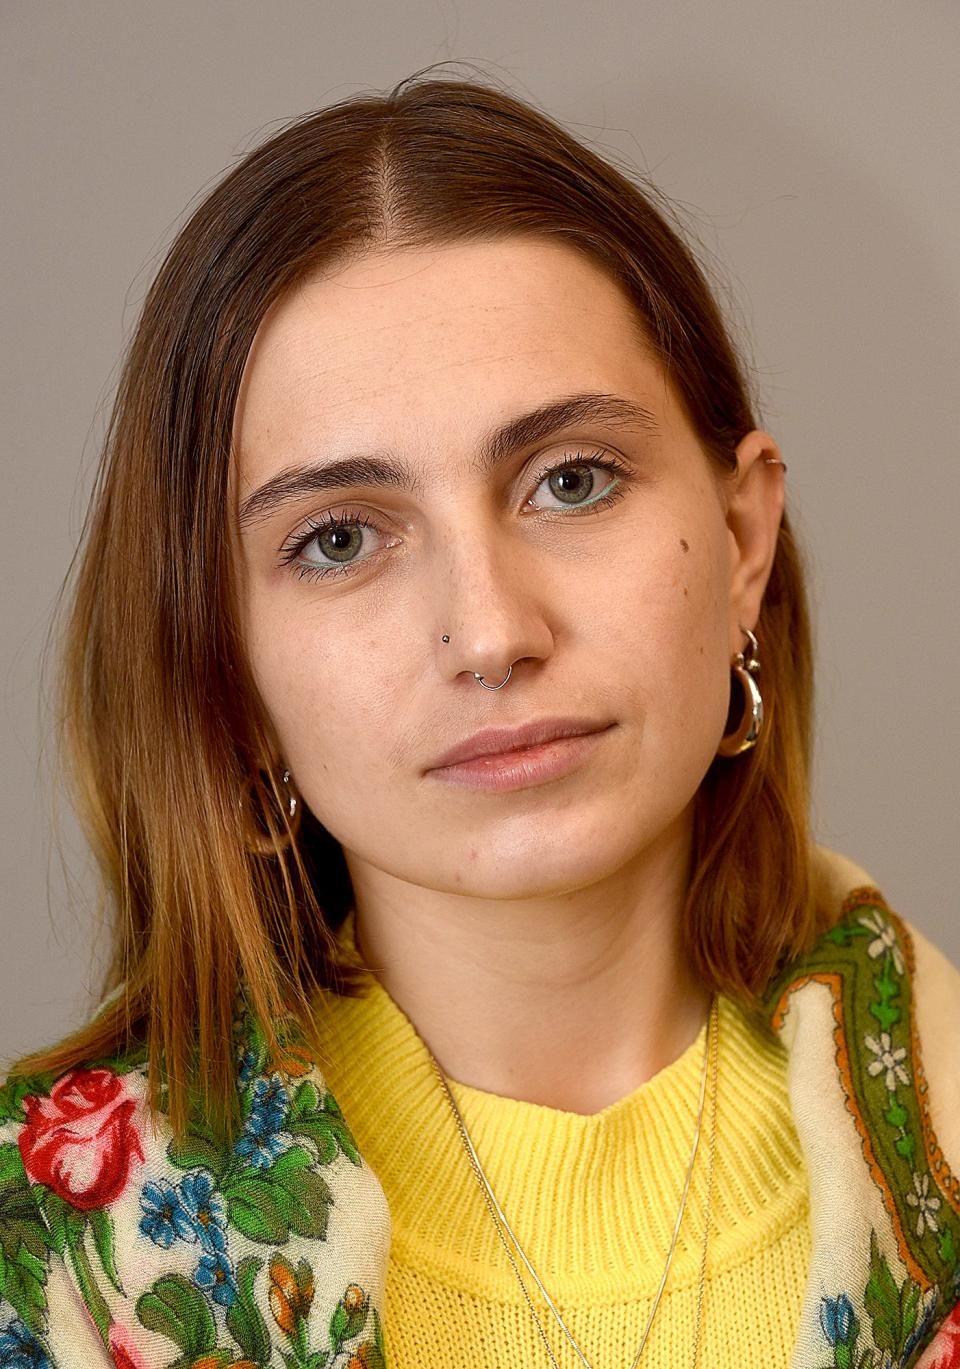 Irynka Hromotska, a Fulbright Scholar from Ukraine studying at the University of Missouri, is helping raise funds to support Ukrainians fighting the Russian invasion of Ukraine.